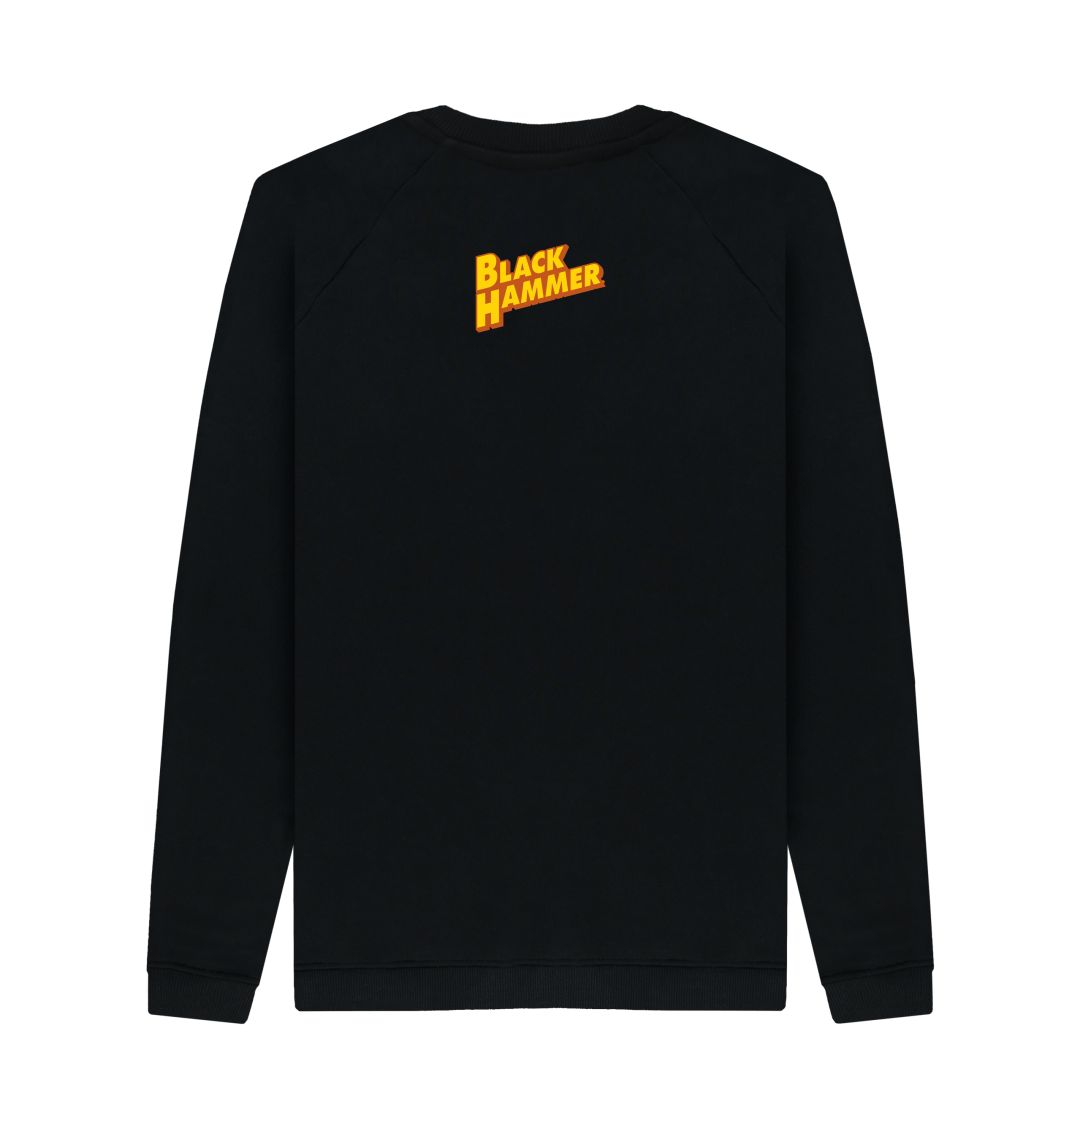 Black Hammer Issue 4 (Back Logo) Sweater